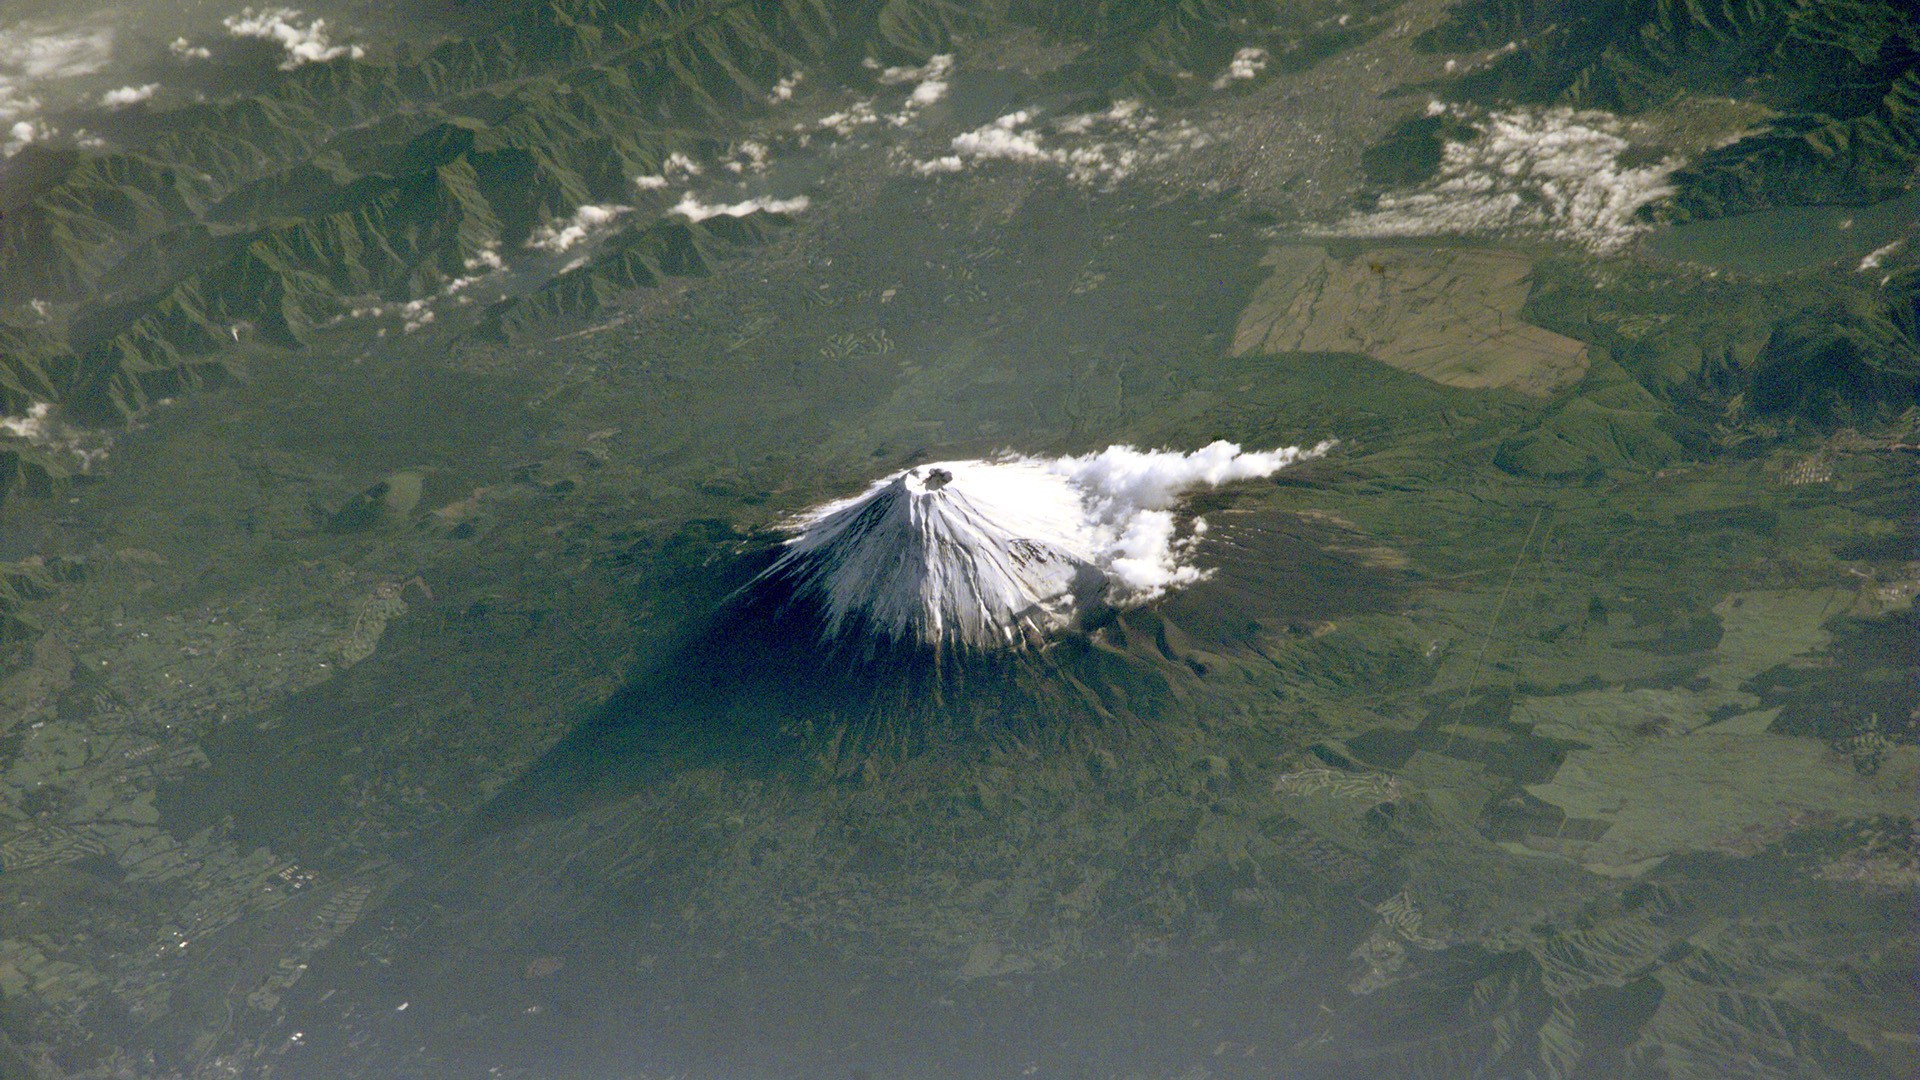 Nature Landscape Aerial View Mount Fuji Japan Mountains Volcano Snowy Peak Clouds Shadow Internation 1920x1080